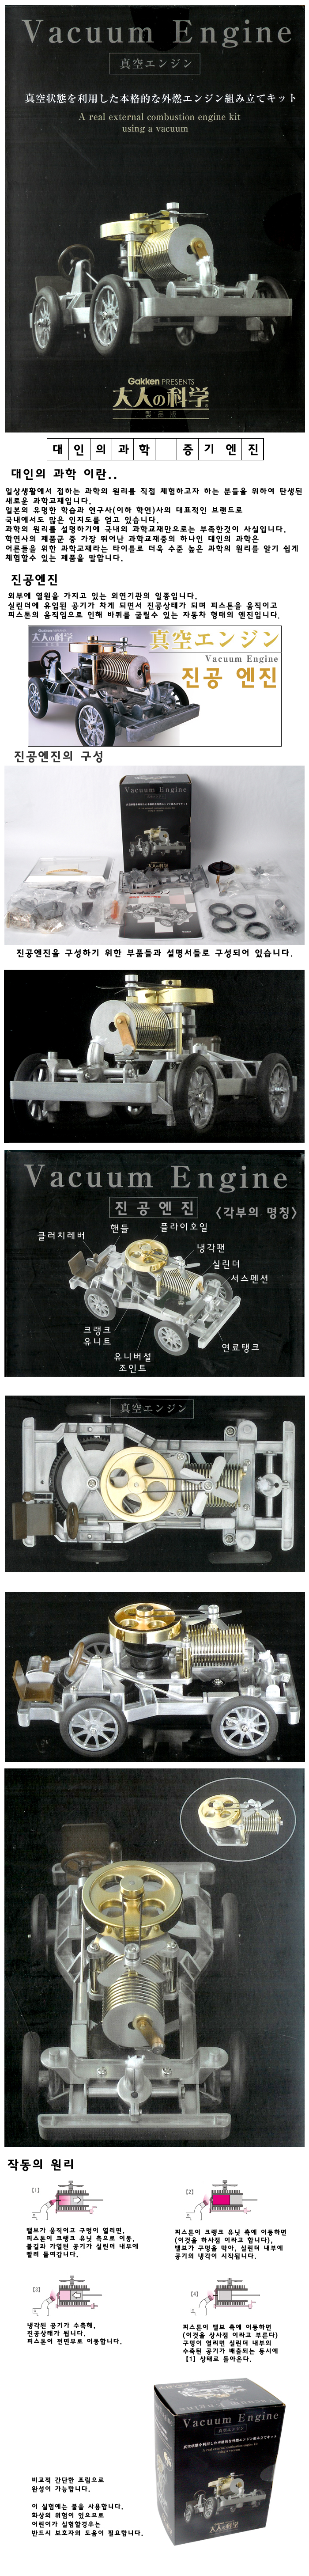 engine image.jpg